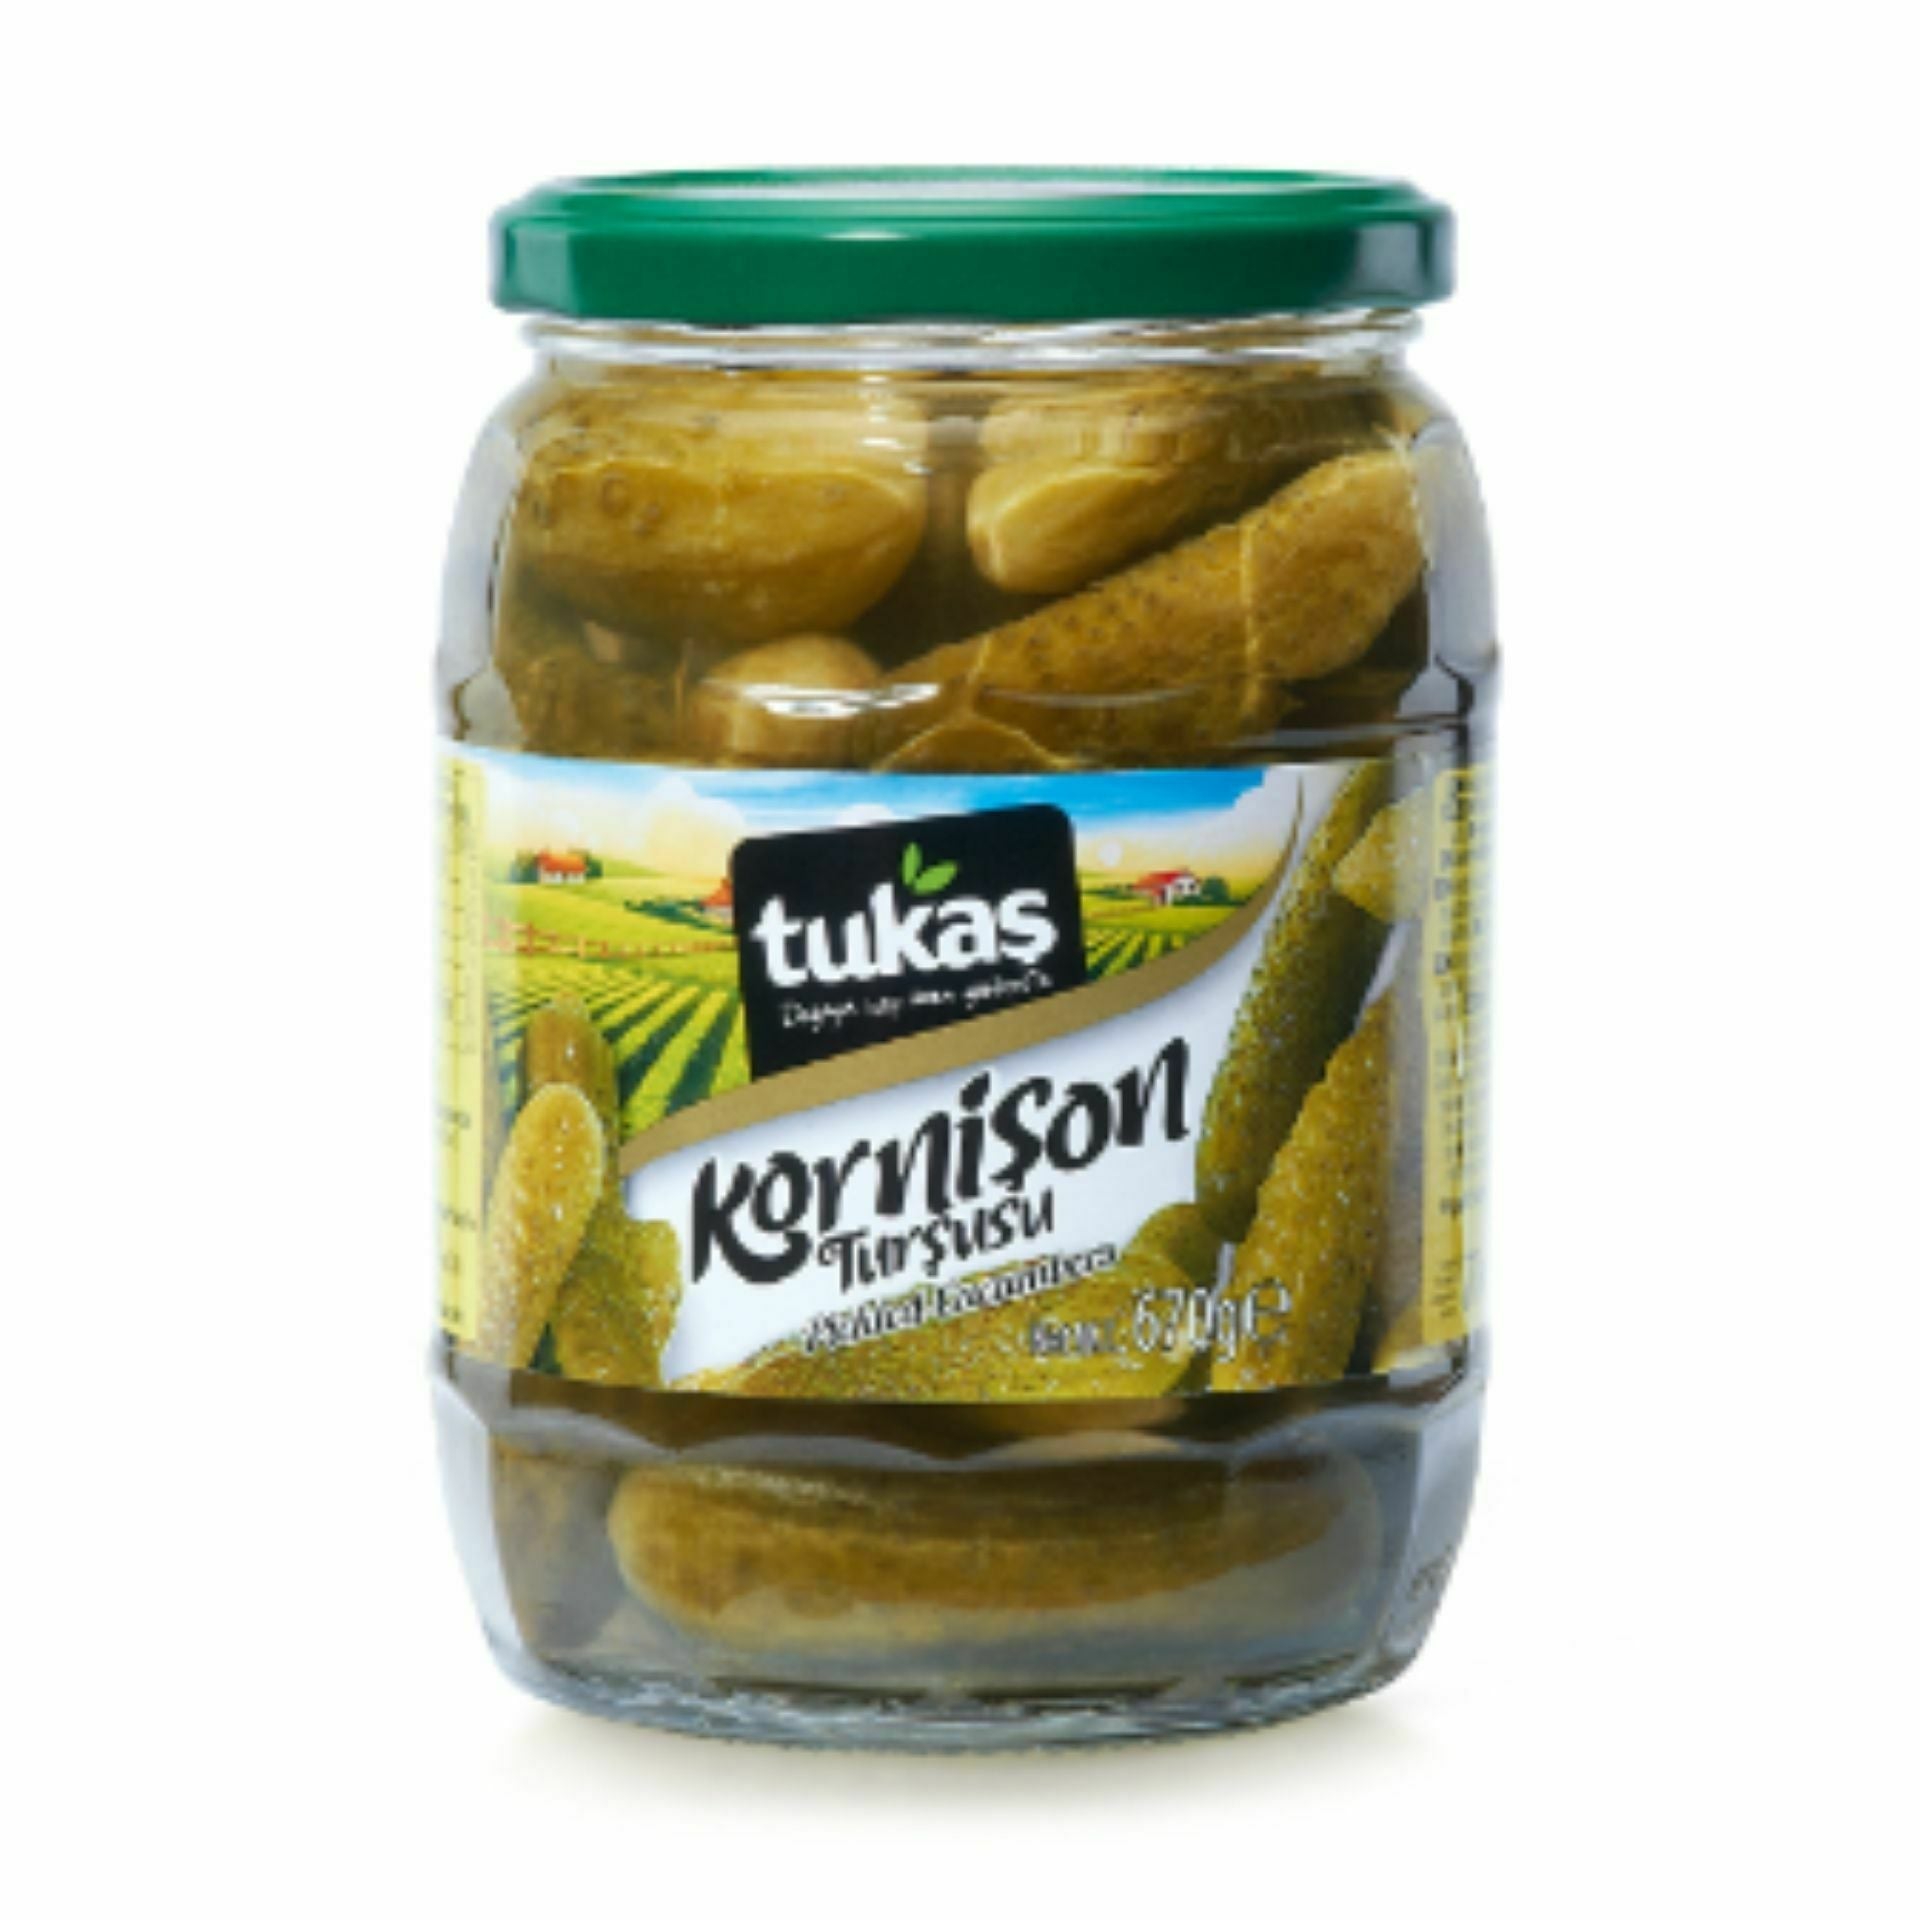 Tukas Kornison Tursu No:2 / Cornichon Pickles (670G) - Aytac Foods